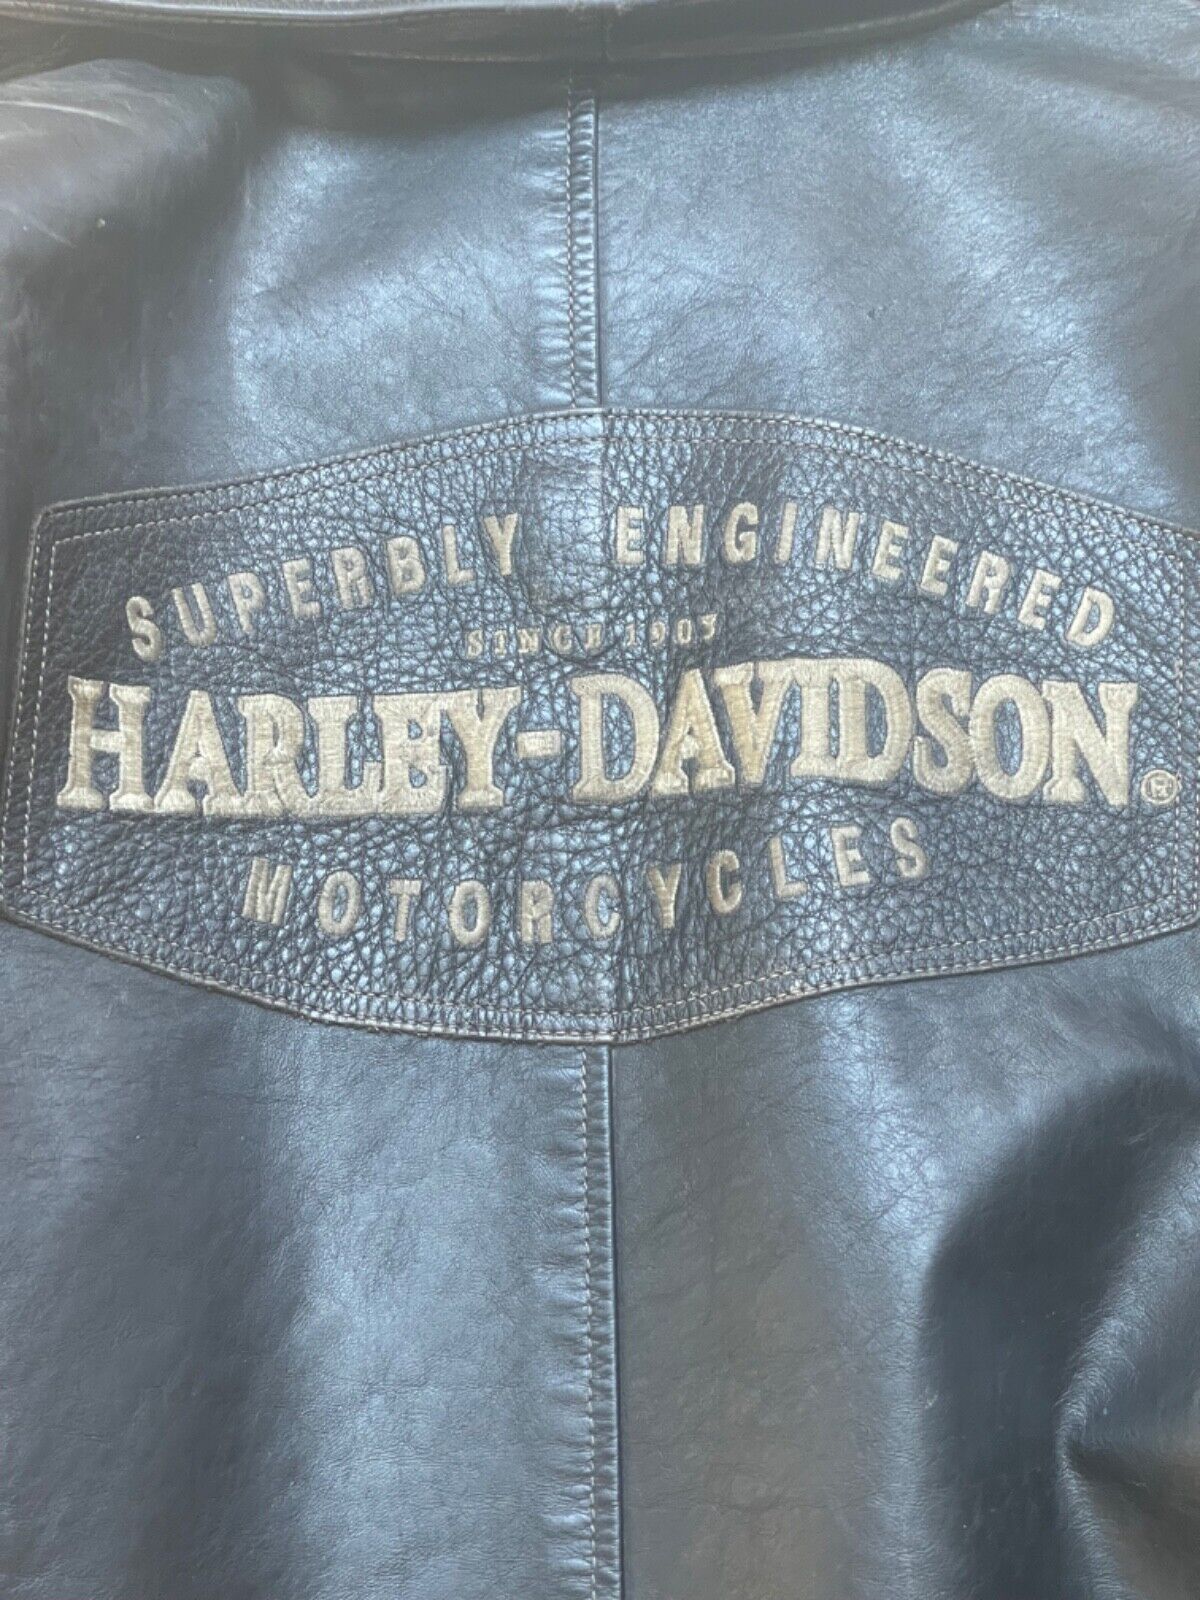 Sophisticated black leather Harley Davidson men’s jacket size XLarge